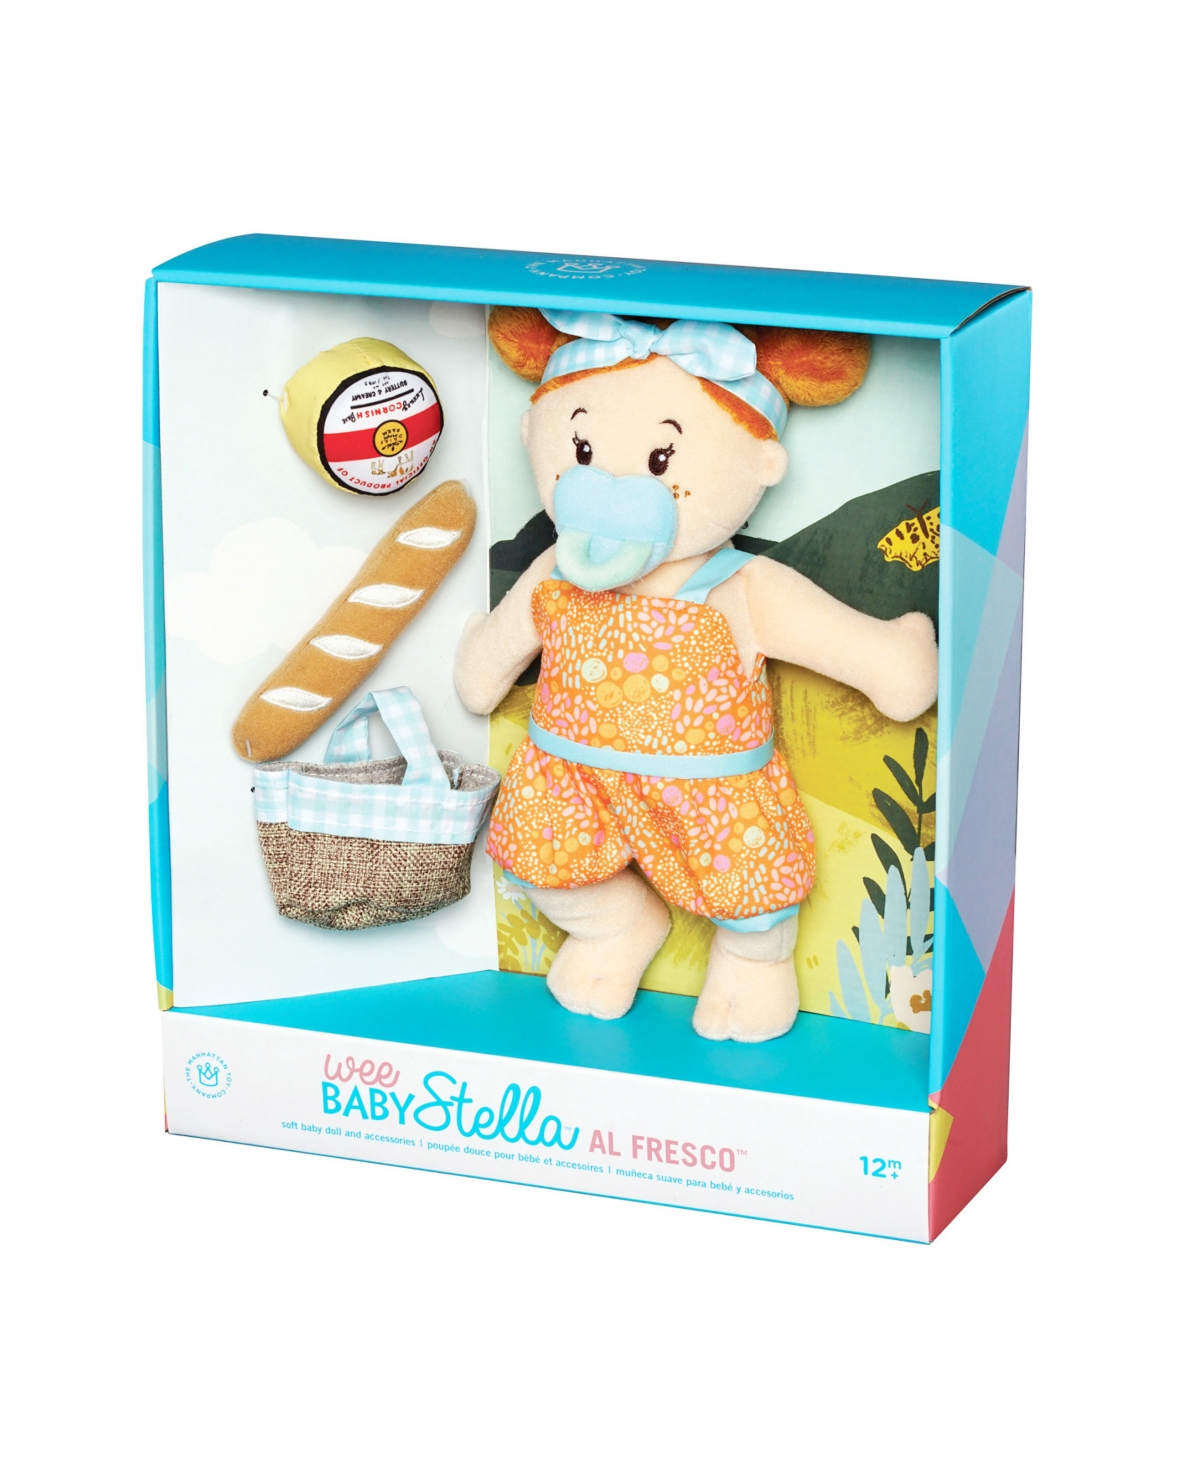 Shop Manhattan Toy Company Wee Baby Stella Peach Al Fresco 12" Soft Baby Doll Set, 6 Piece In Multicolor